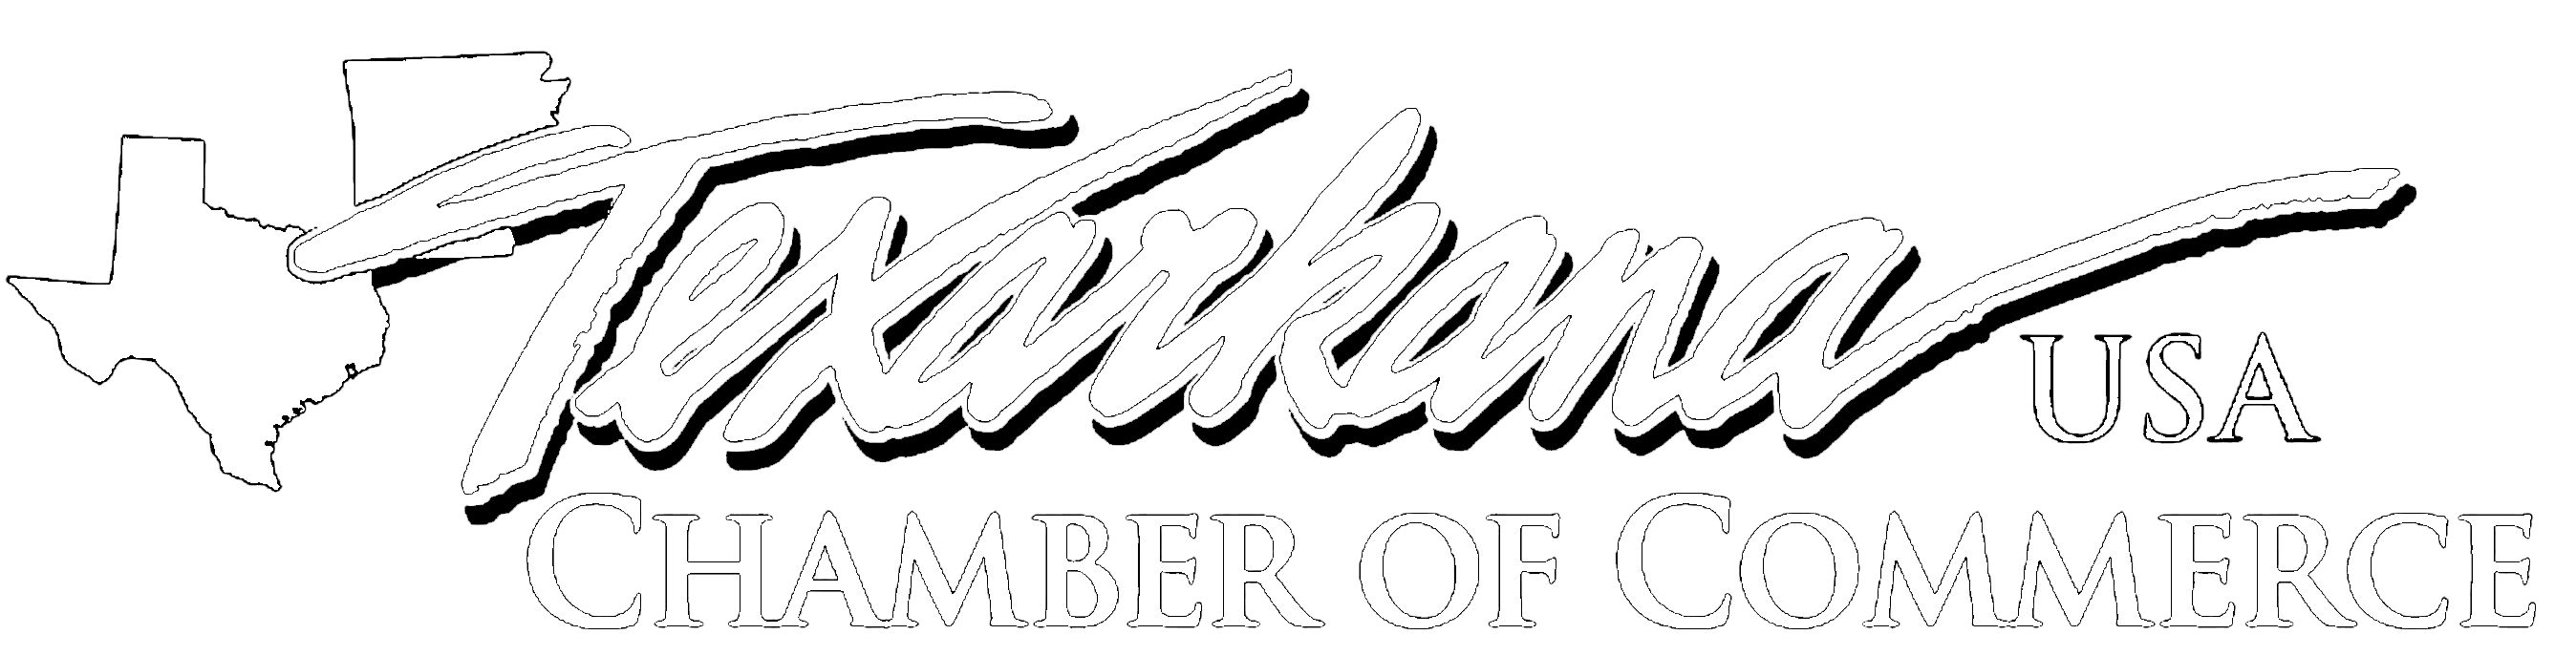 Leading Regional Department Store Logo - Major Employers - Texarkana Chamber of Commerce